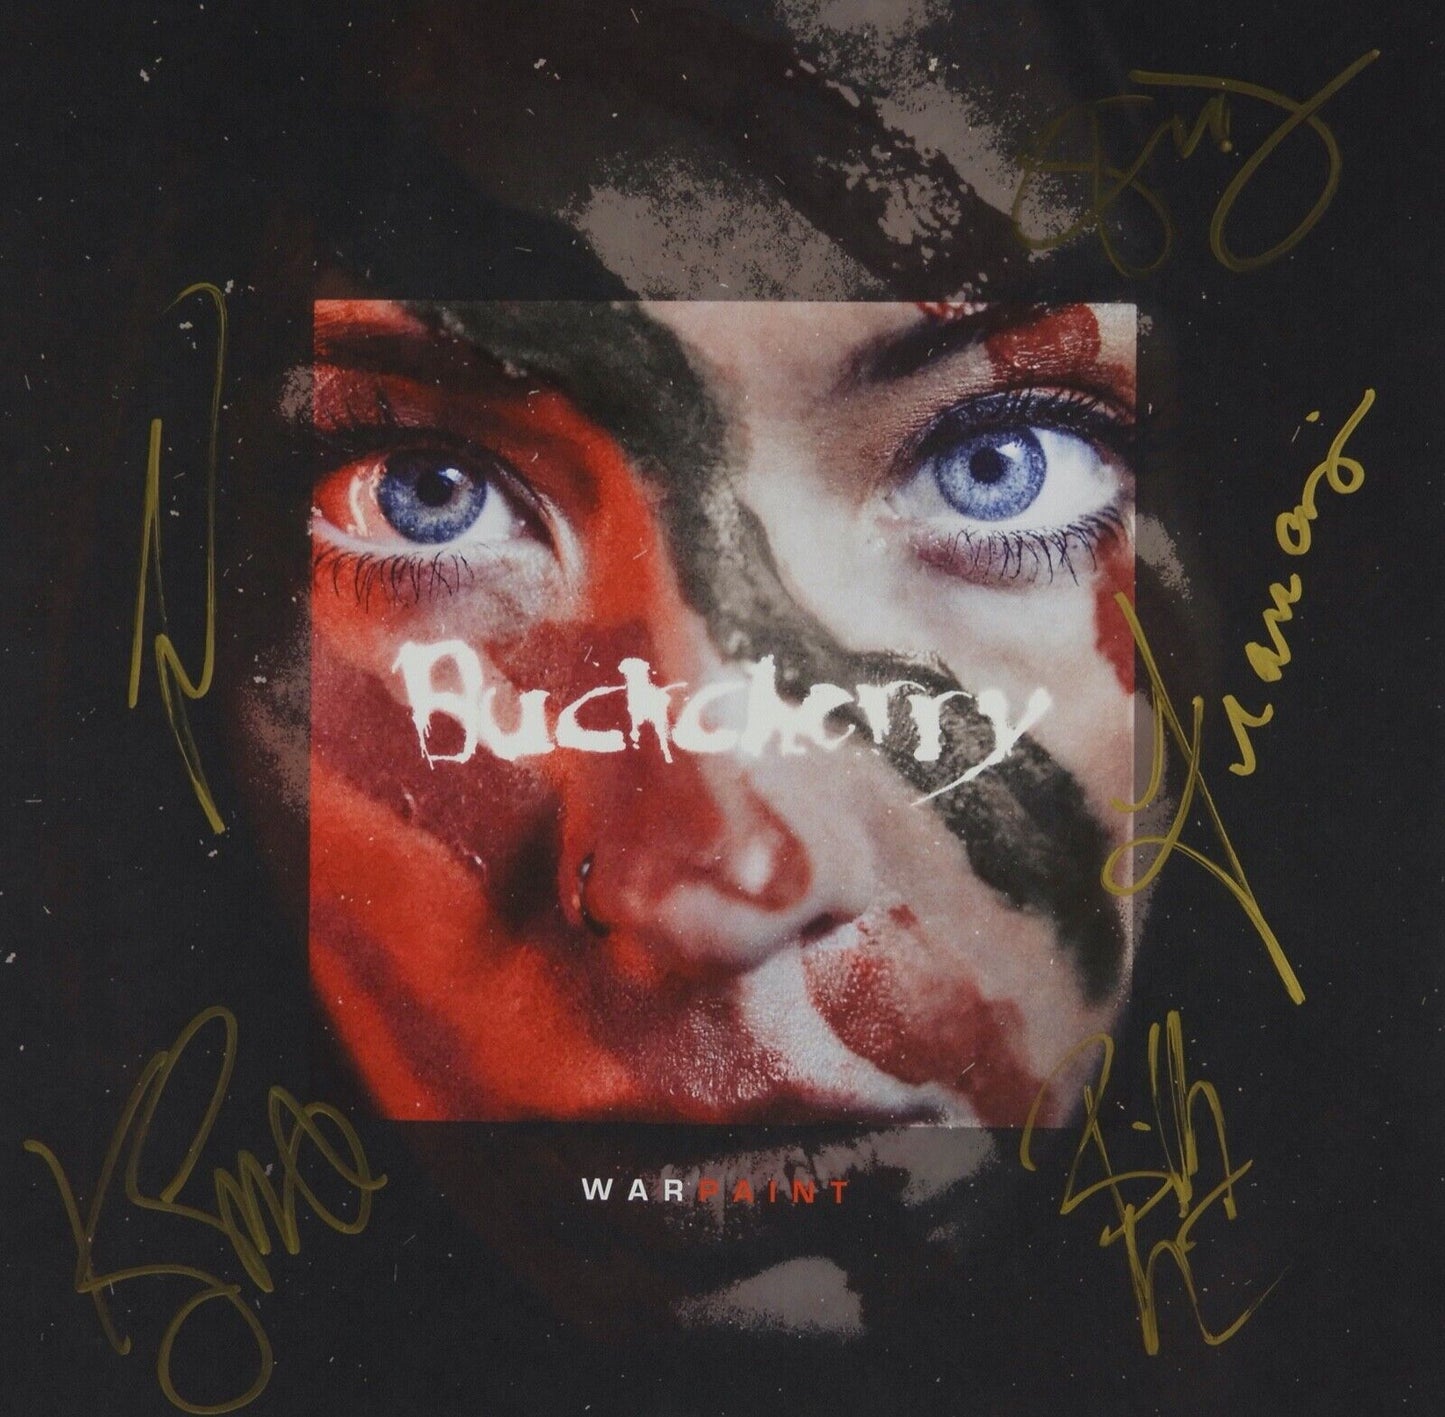 Buckcherry War Paint Fully Signed JSA Signed Autograph Album Record LP Red Vinyl